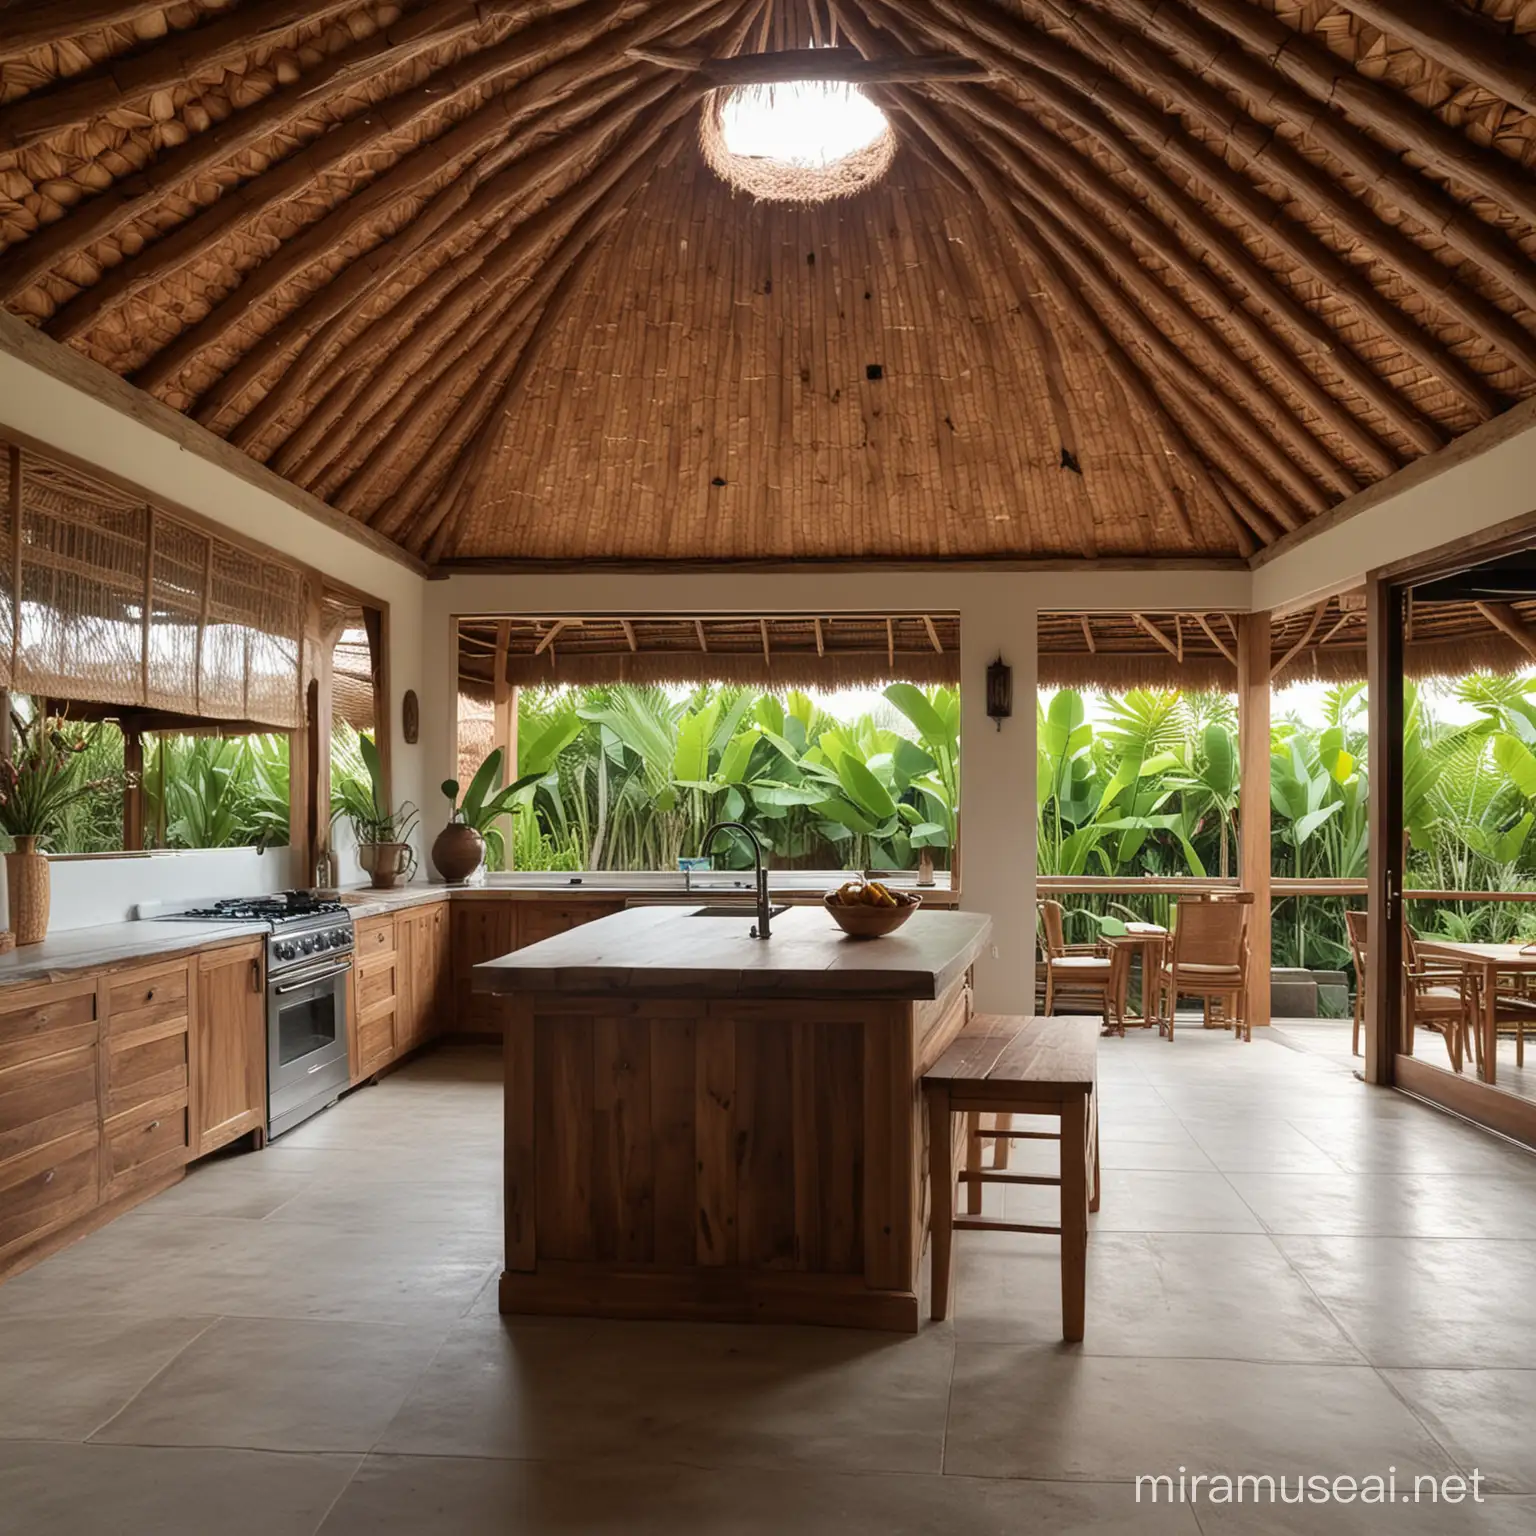 Bali style empty kitchen, wood roof, decor.